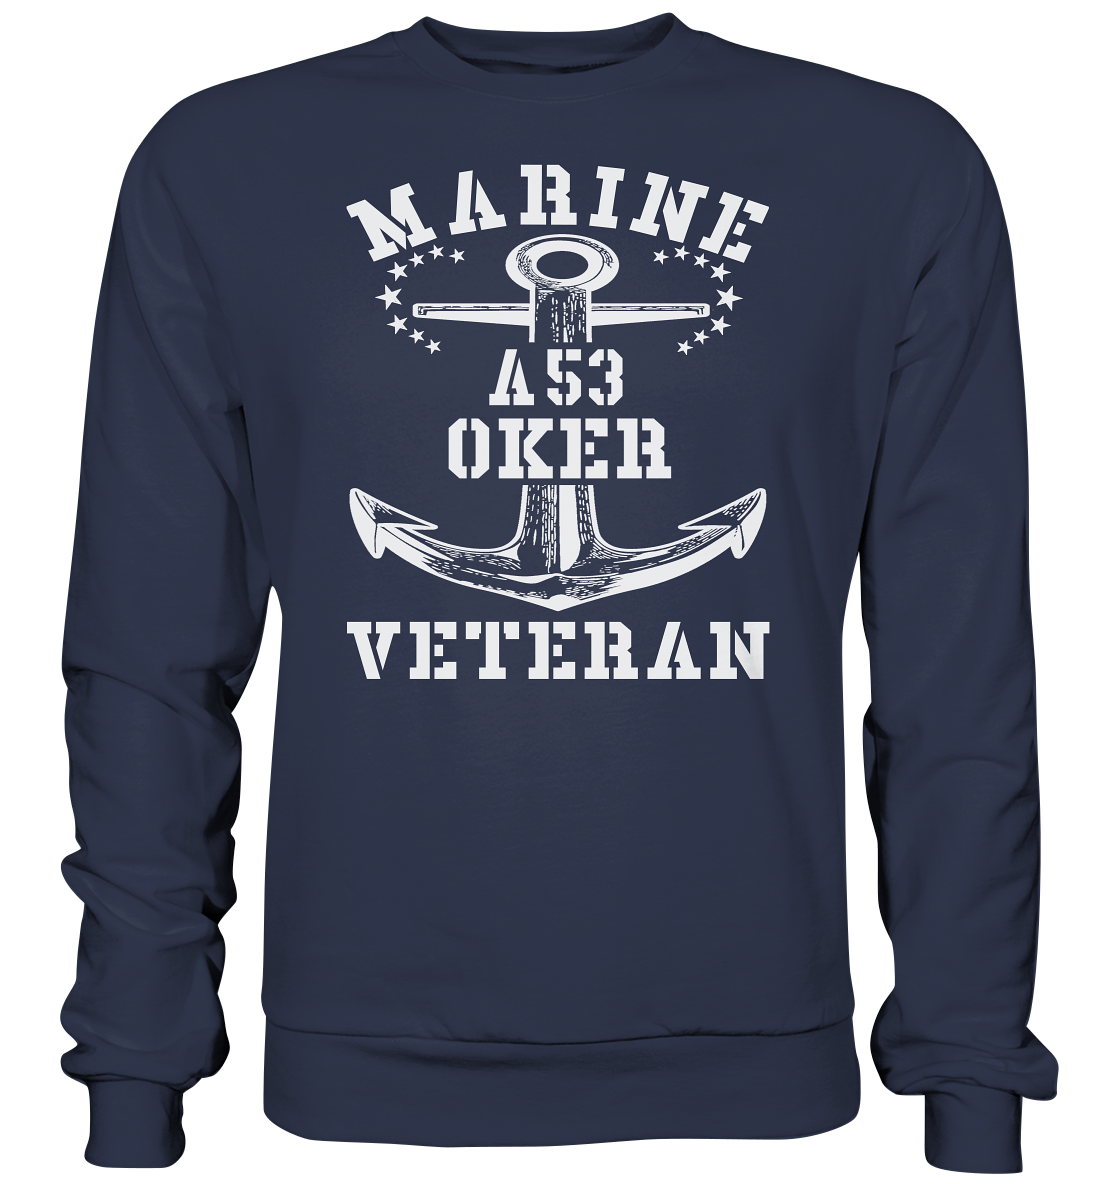 FD-Boot A53 OKER Marine Veteran - Premium Sweatshirt